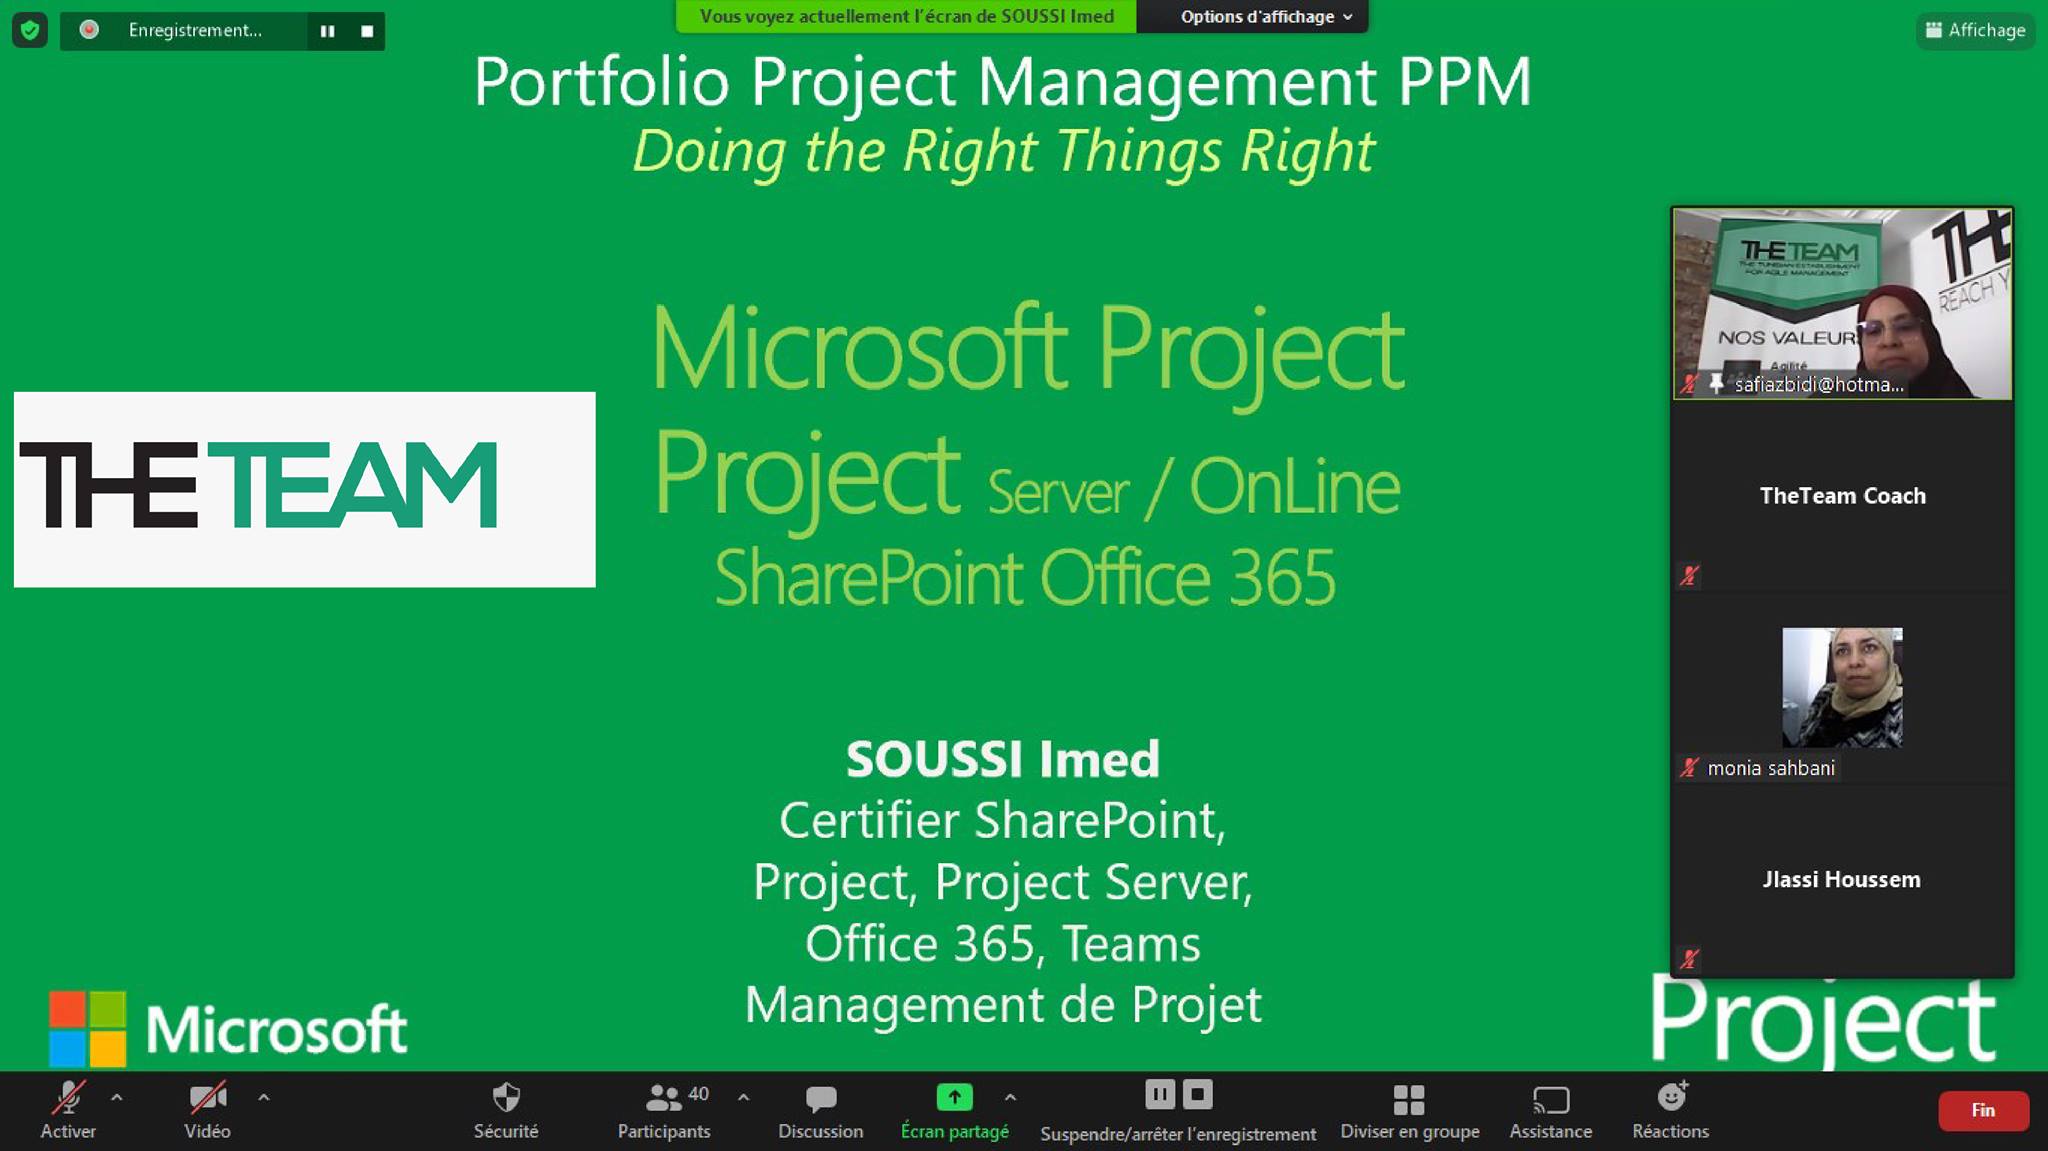 Webinaire Microsoft PPM : Project & Portfolio Management MS Project / Project Server / Project Online